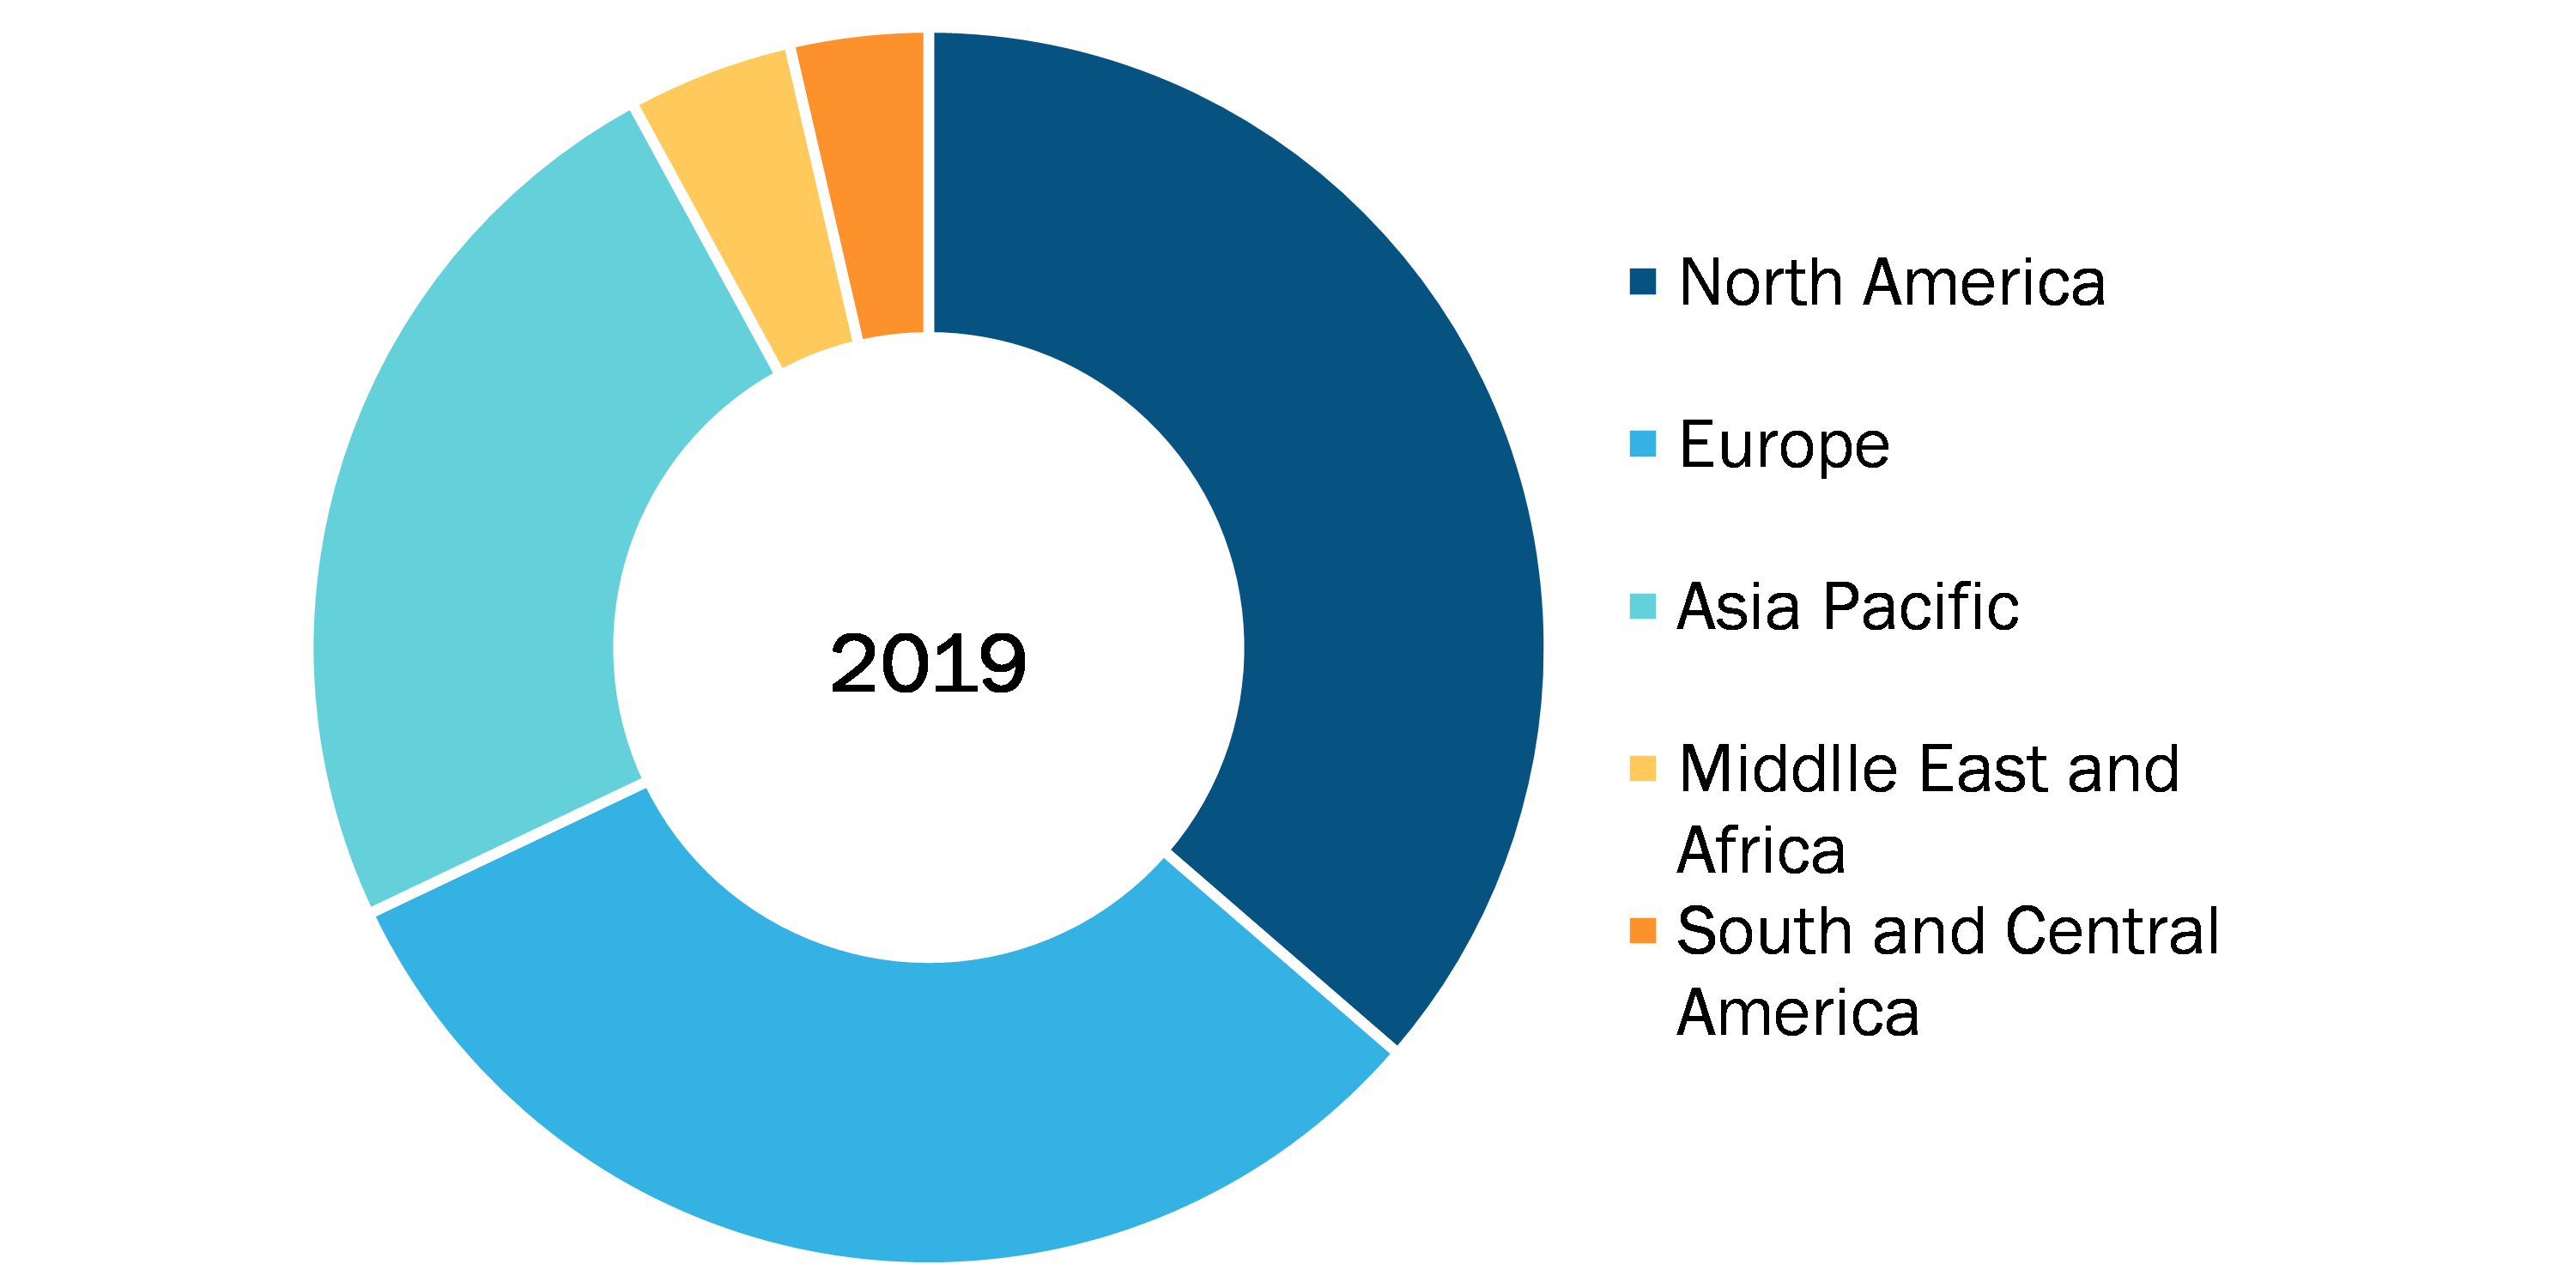 Ferritin Testing Market, by Region, 2019 (%)